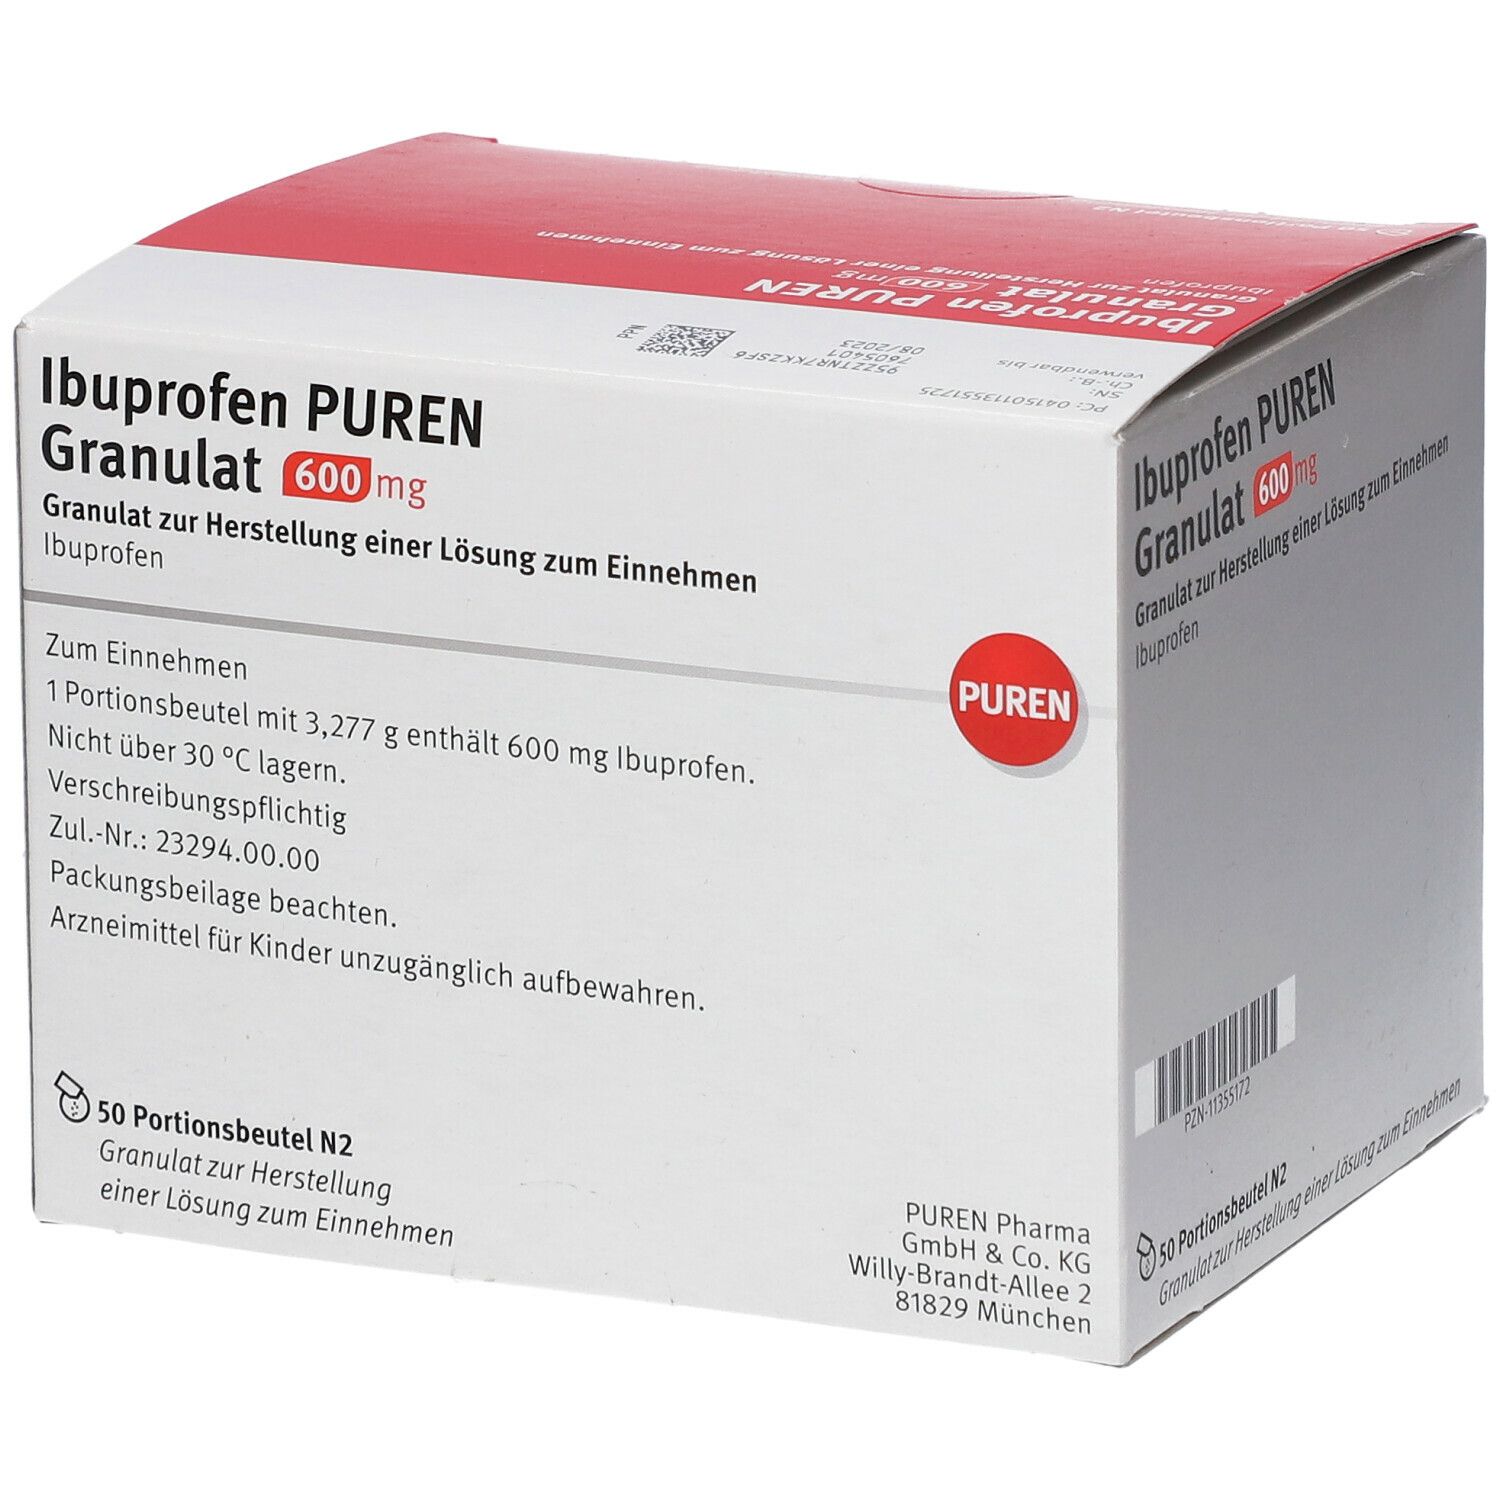 Ibuprofen PUREN Granulat 600 mg